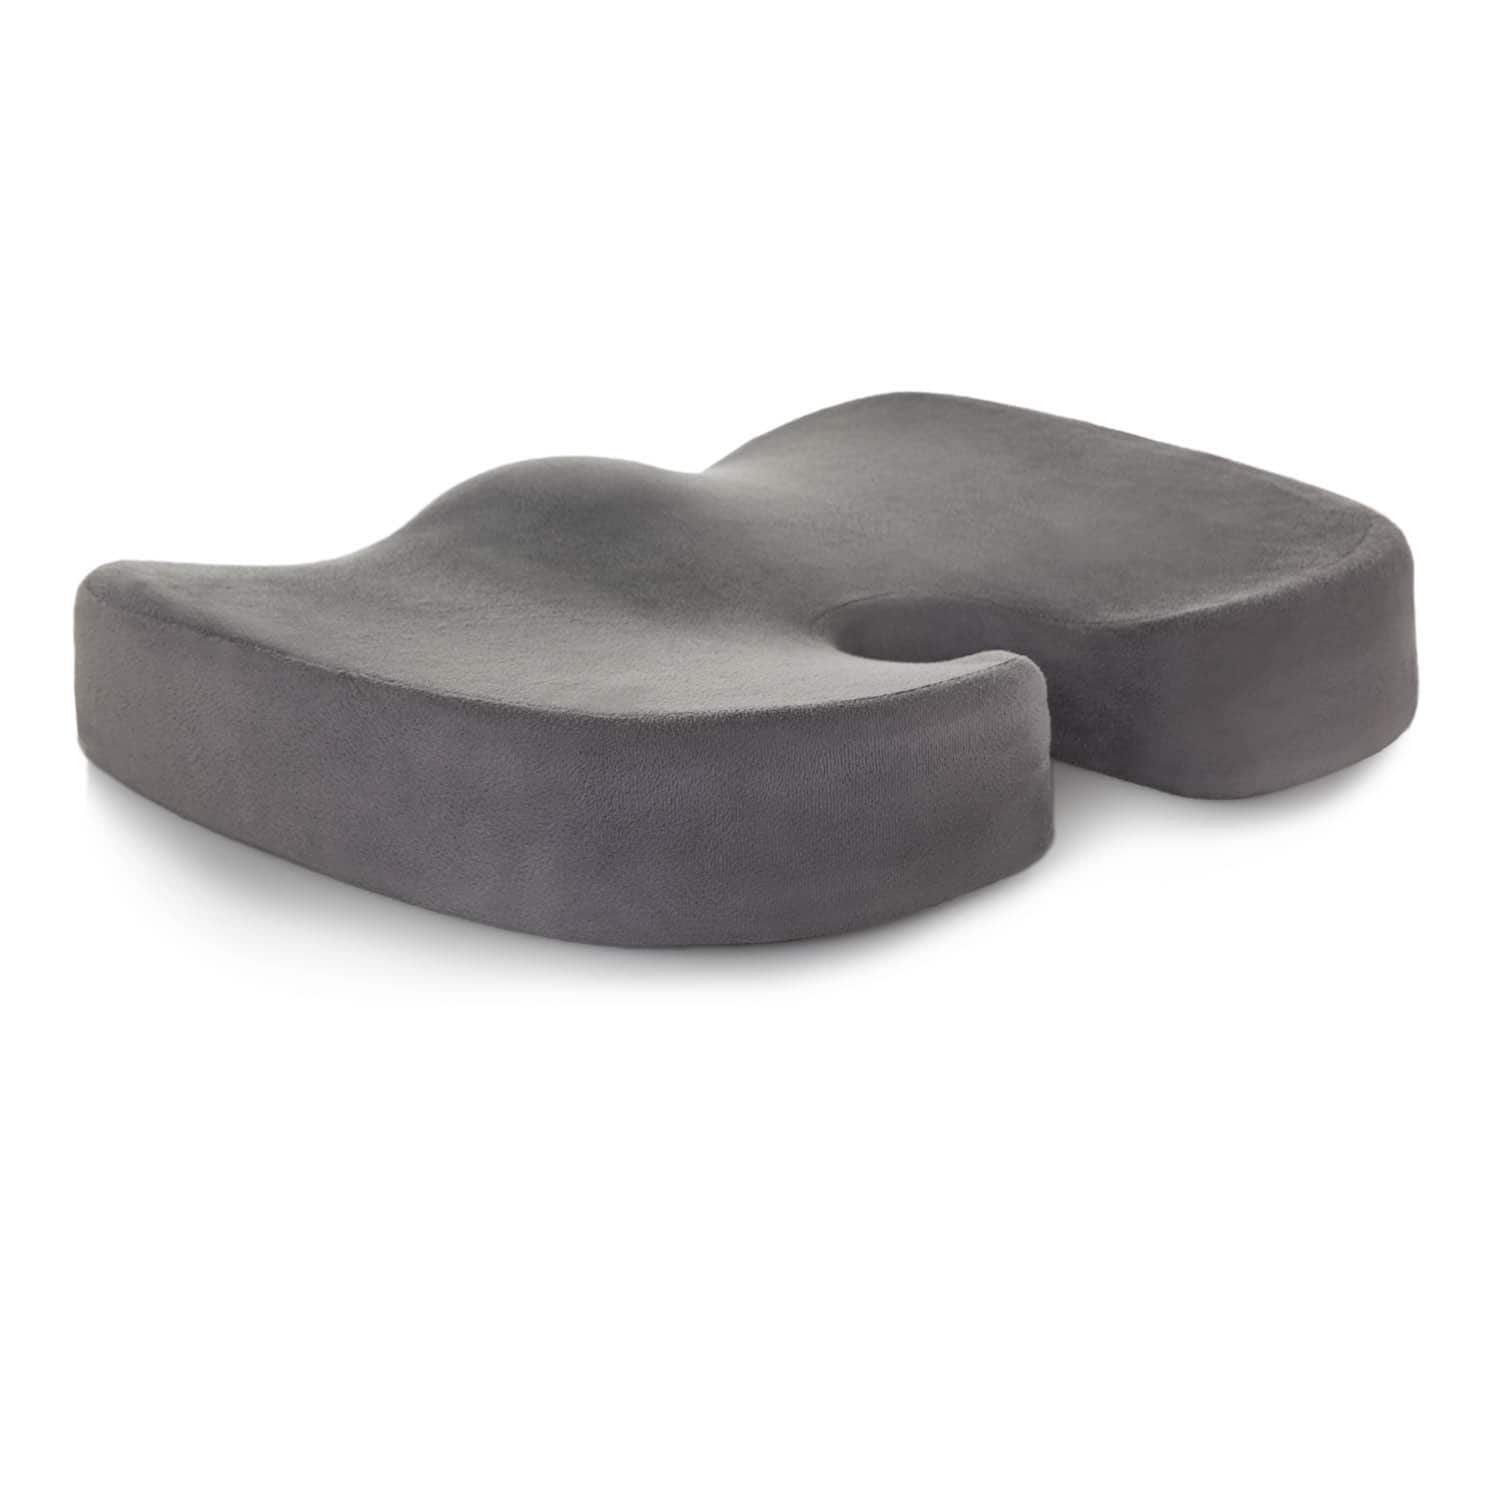 ComfySure Car Seat Wedge Pillow - Memory Foam Firm Cushion-Pain